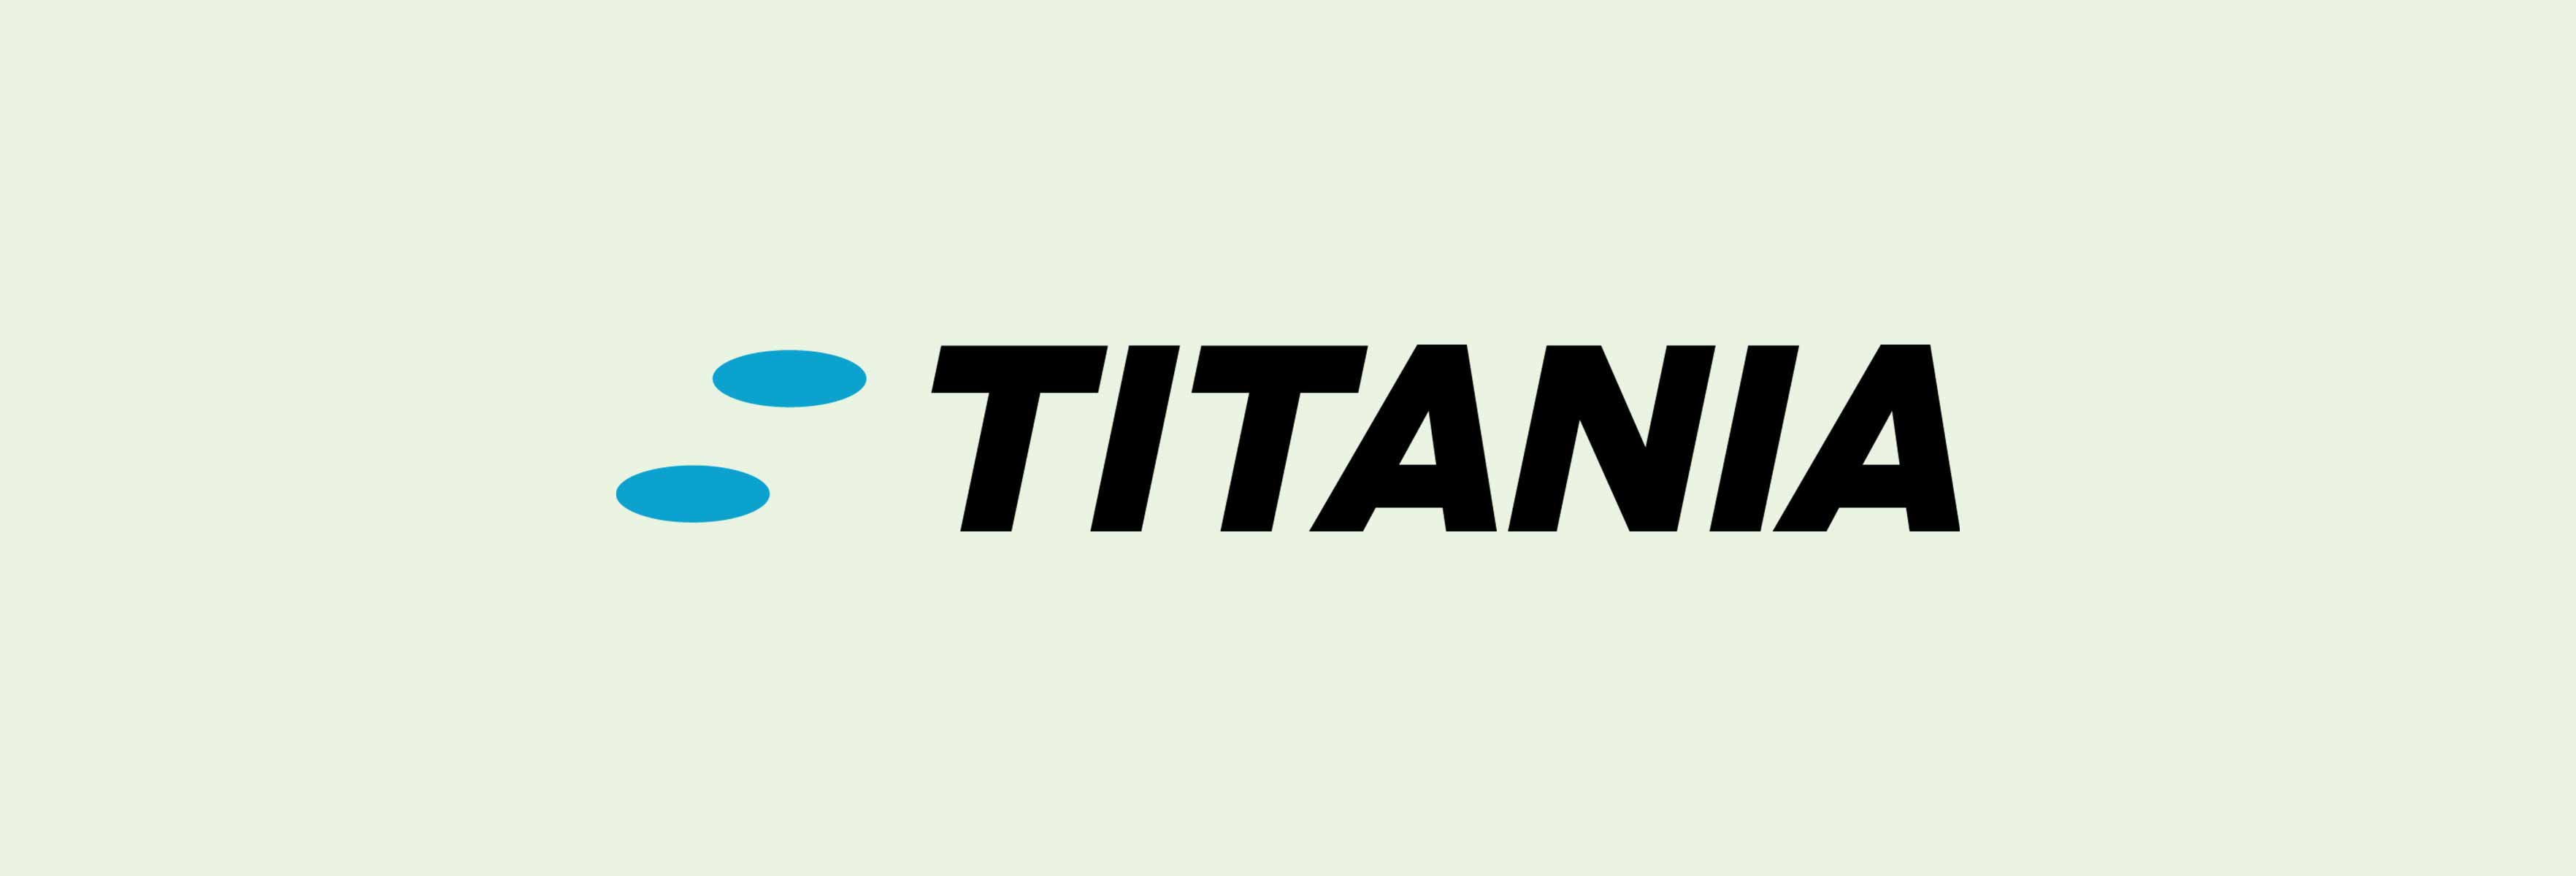 Titania logo wide